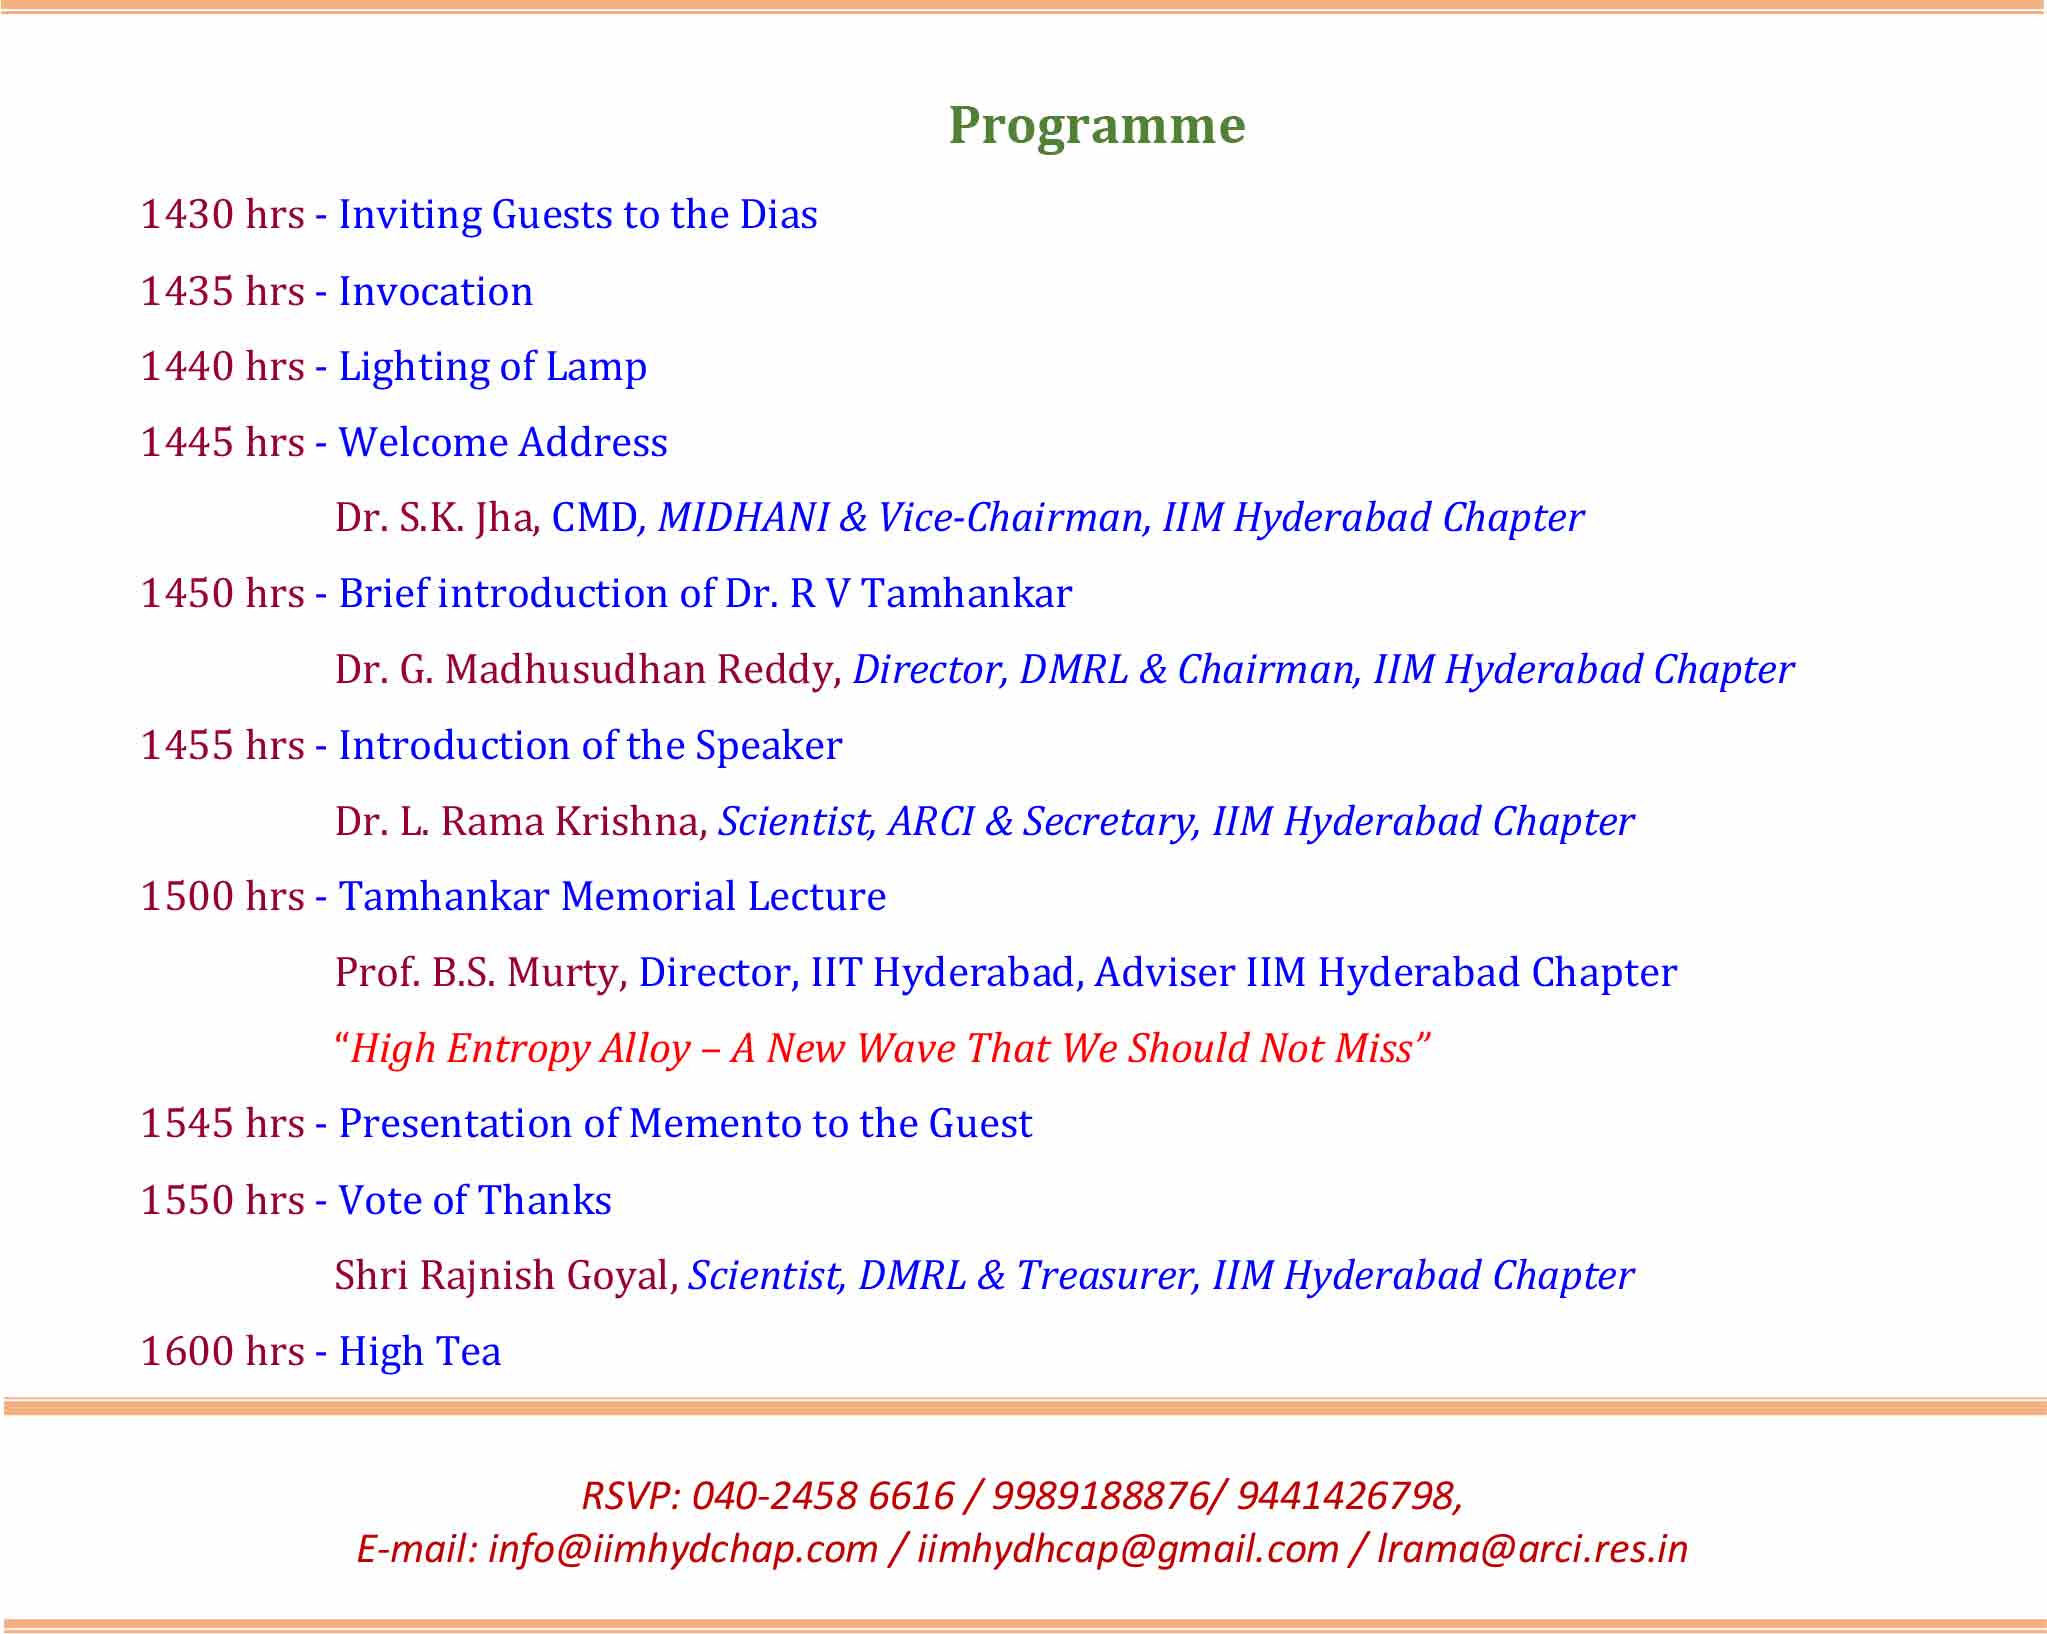 XXVIII Tamhankar Memorial Lecture by Prof. B.S. Murty